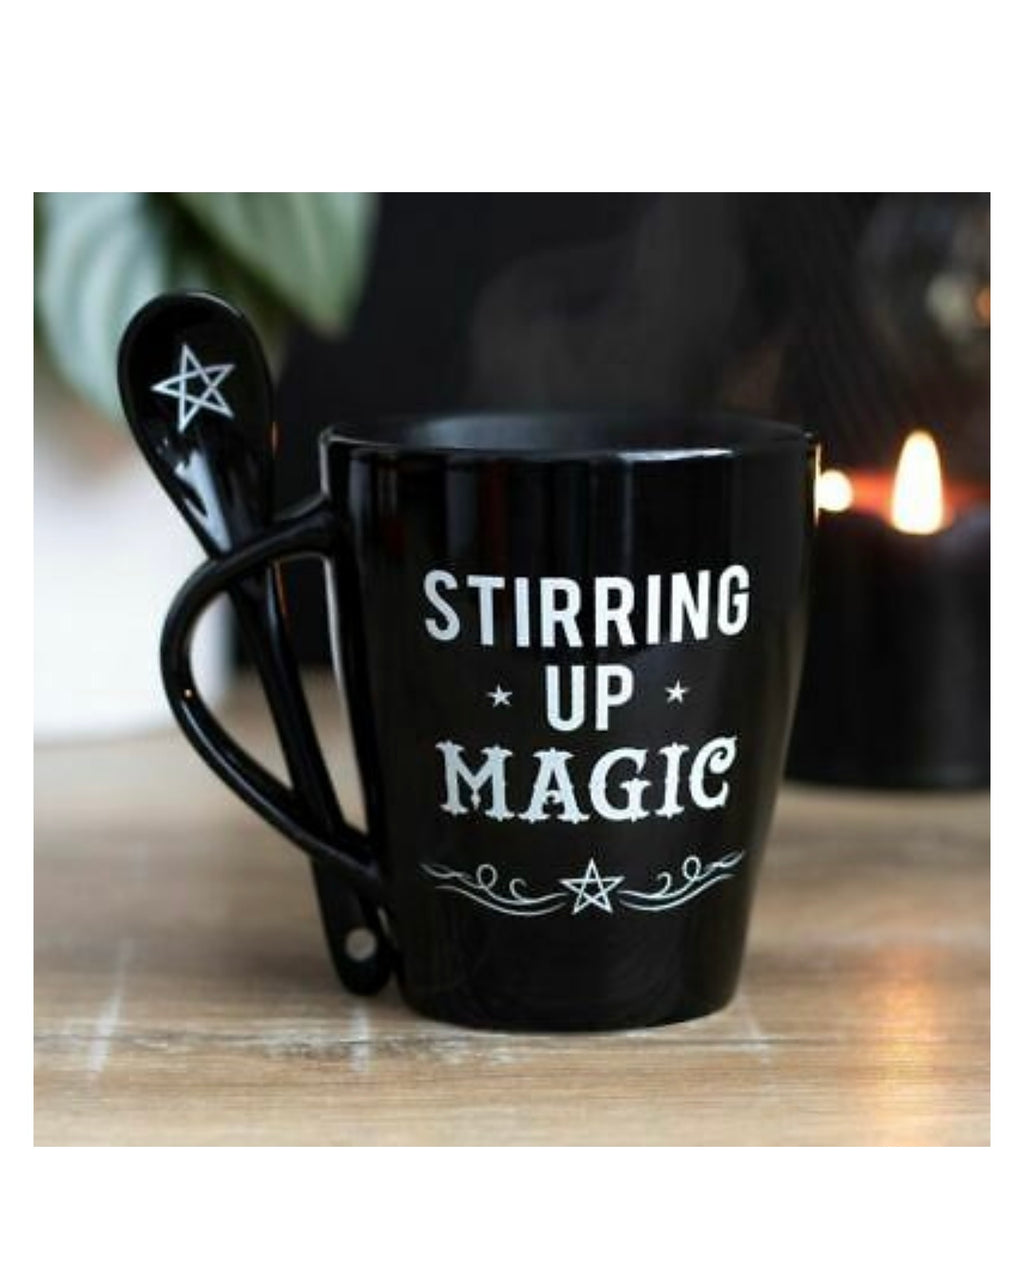 Stirring up magic mug and spoon set